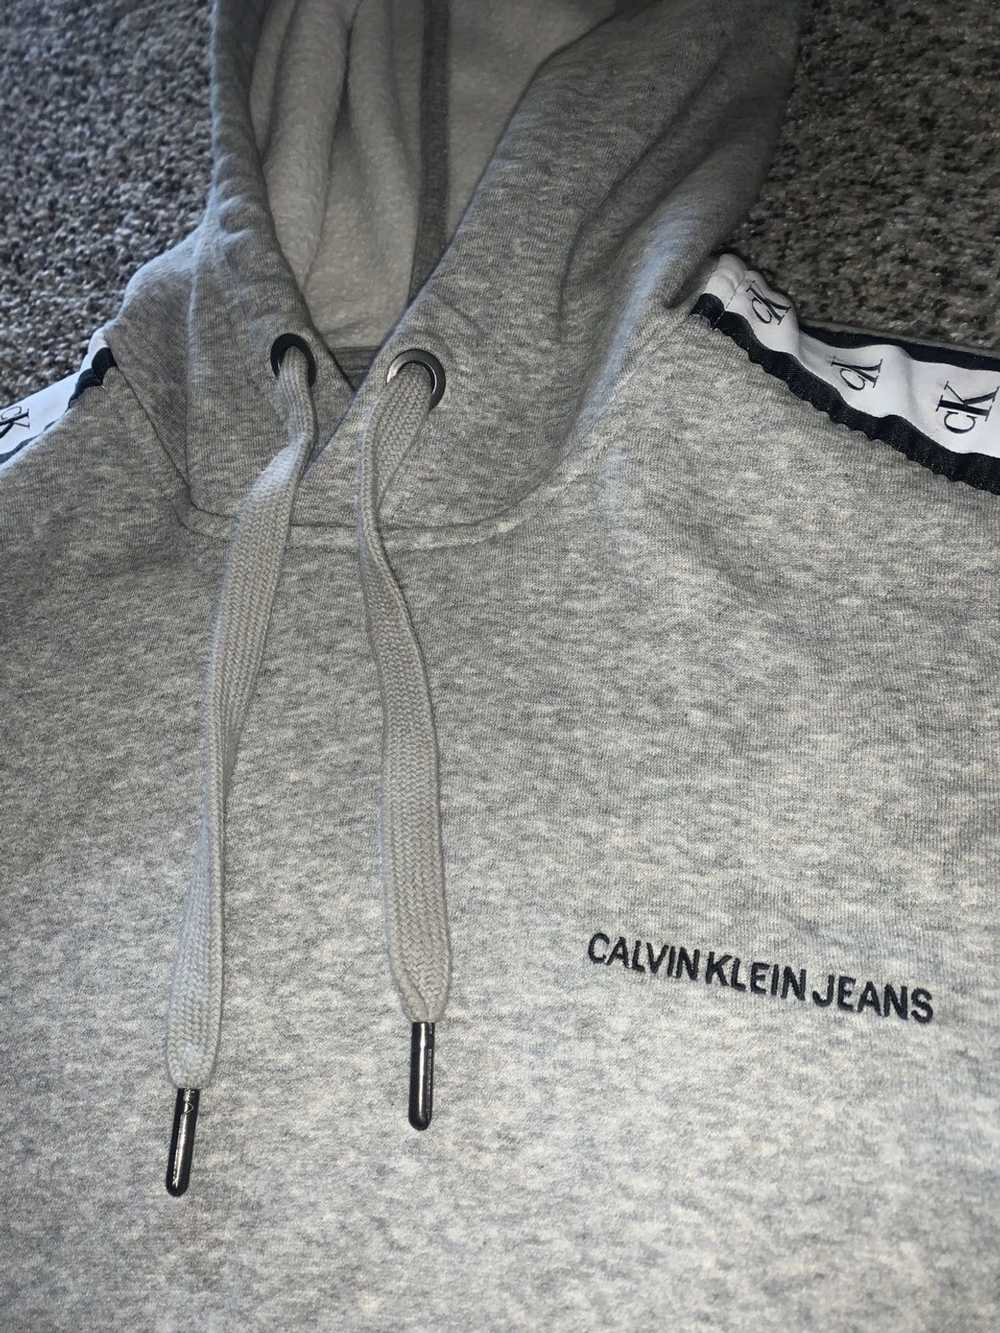 Calvin Klein Calvin Klein jeans logo hoodie - image 2